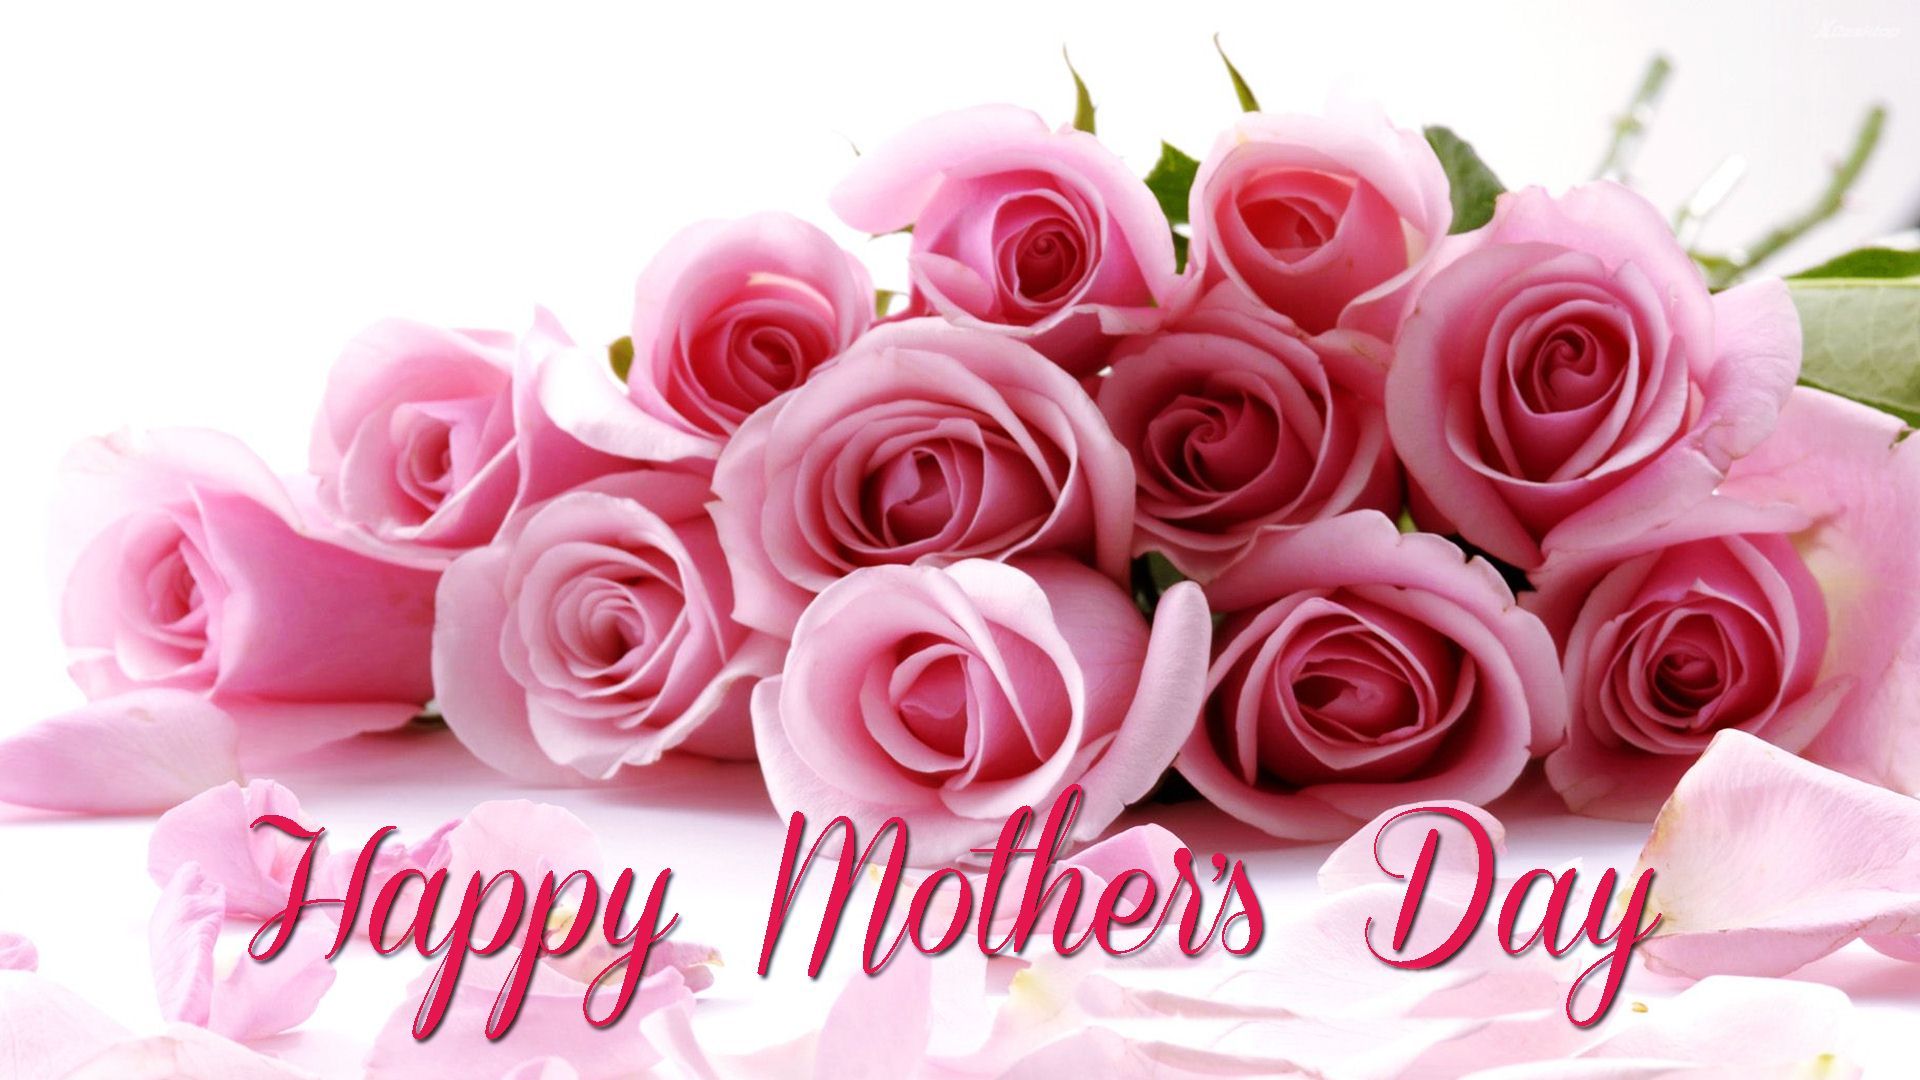 Happy Mothers Day .wallpapertip.com